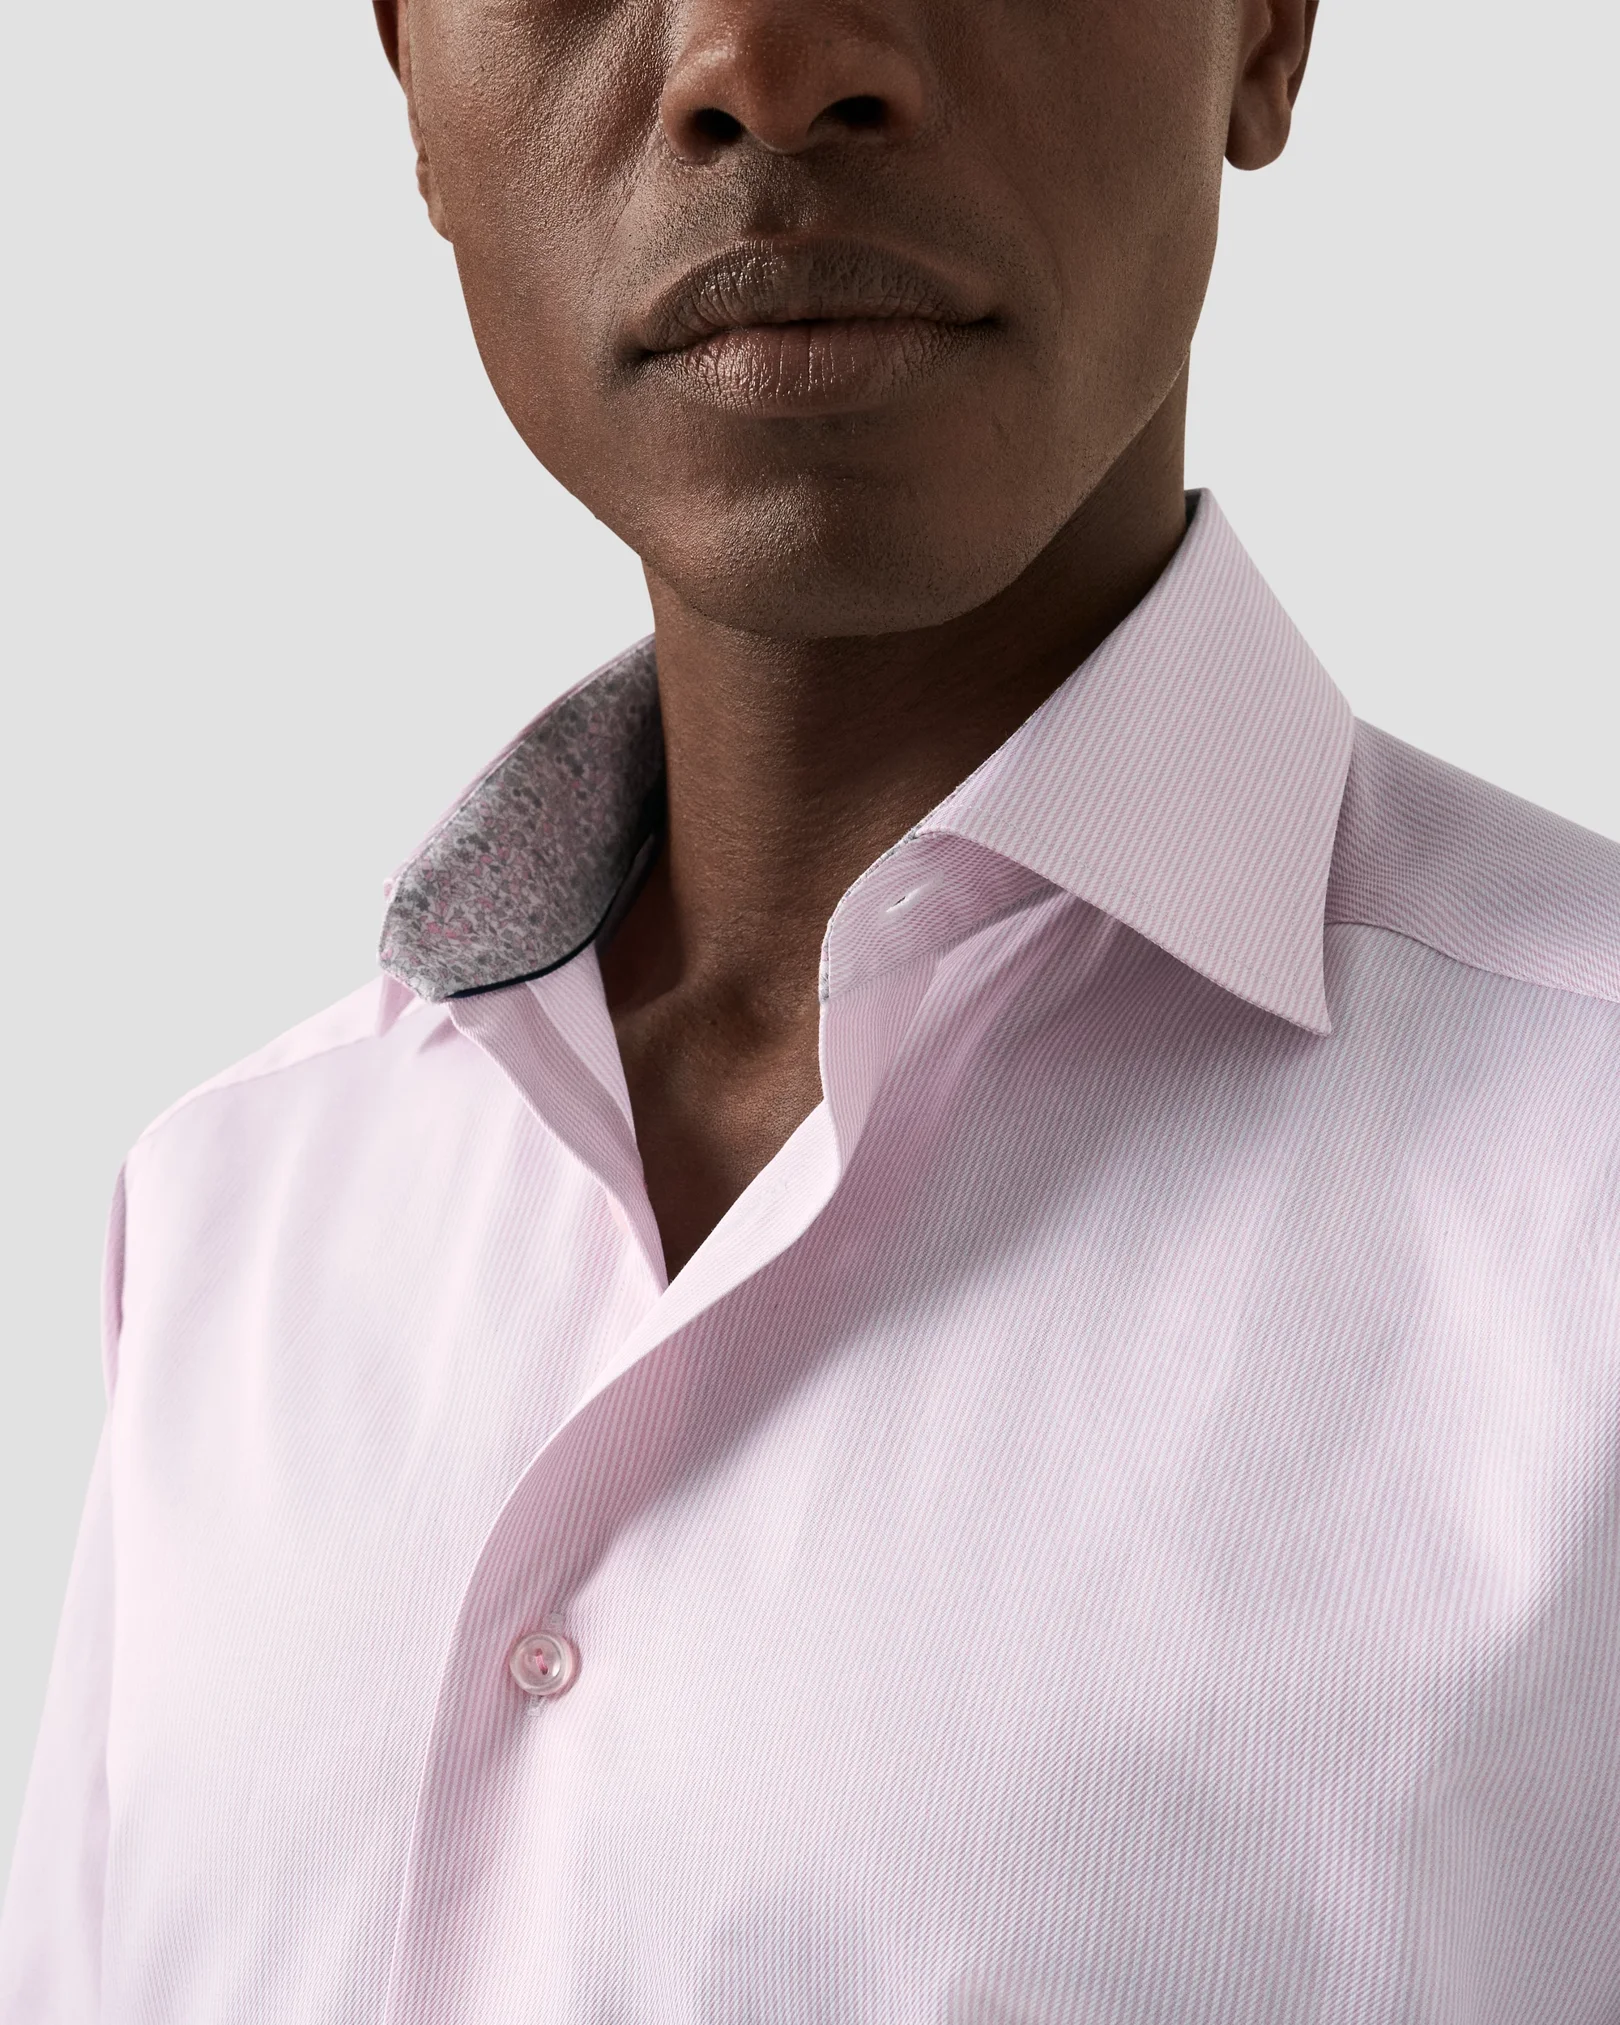 Eton - Fine Striped Signature Twill Shirt